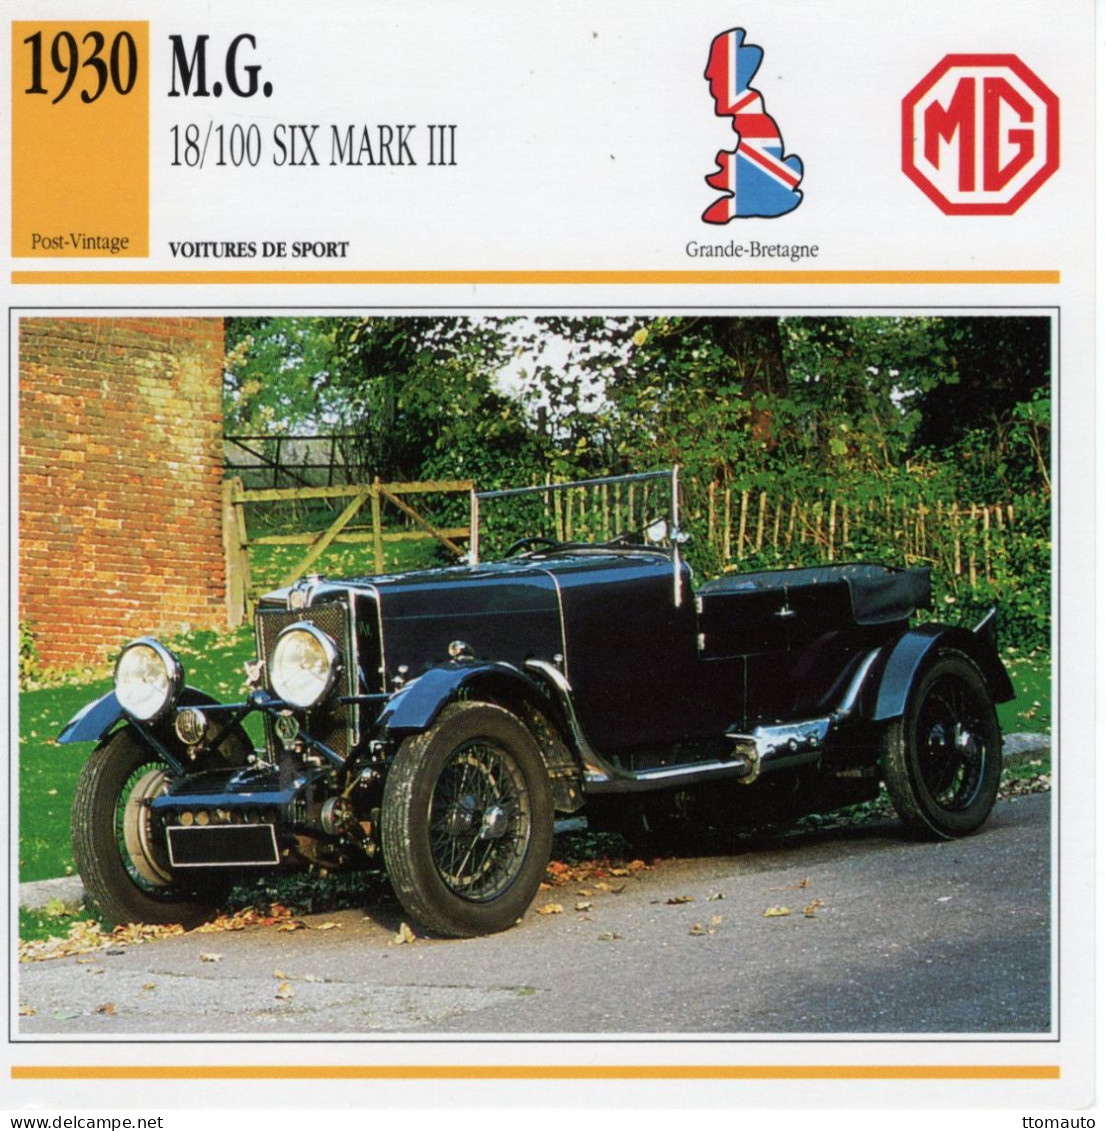 Fiche  -  Voiture De Sport  -  M.G. 18/100 Six Mk.III  (1930)   -  Carte De Collection - Voitures